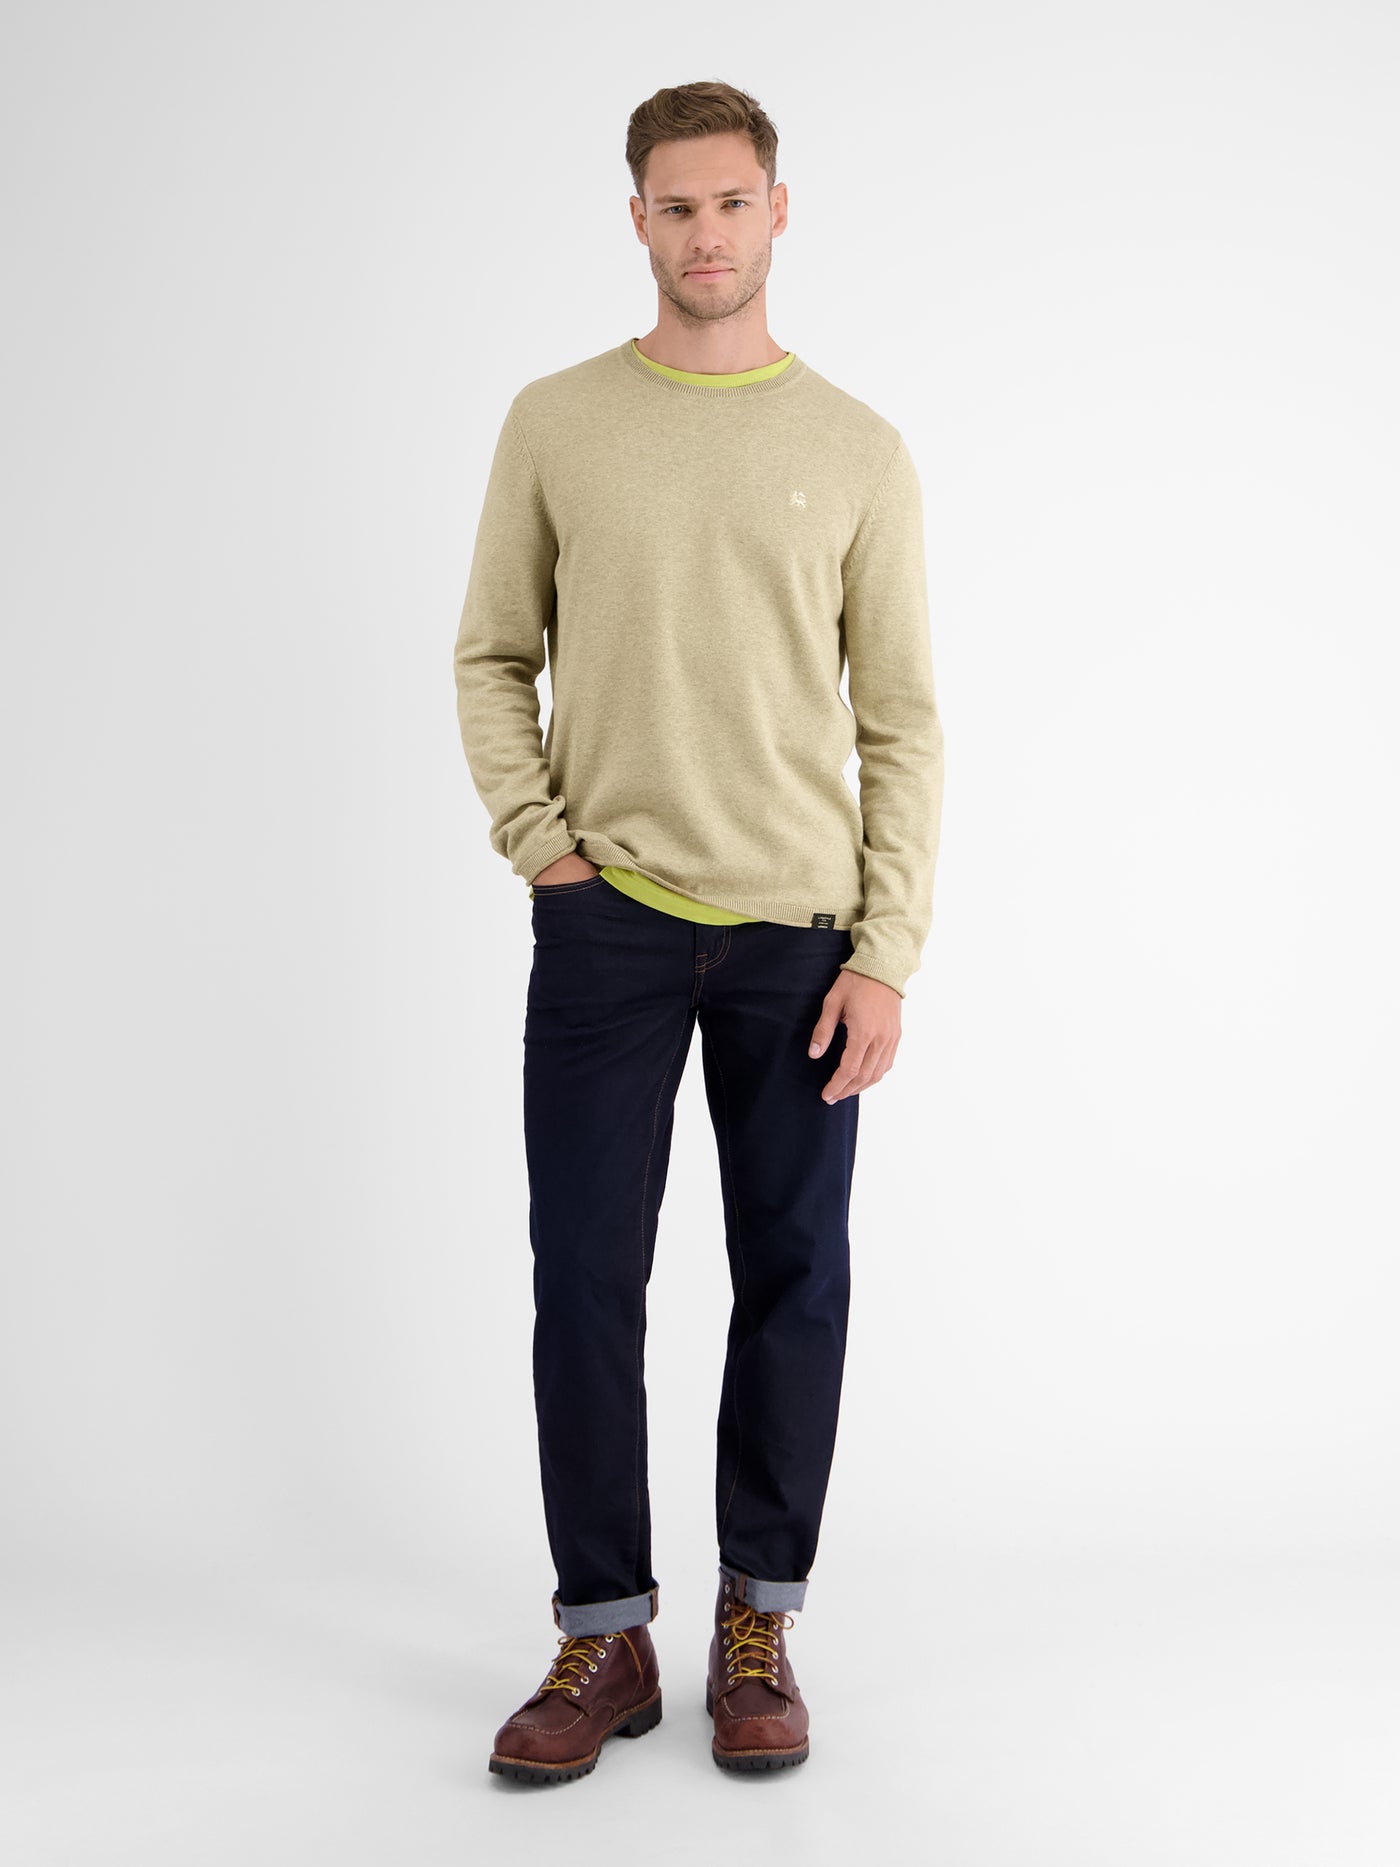 Round neck sweater flat knit